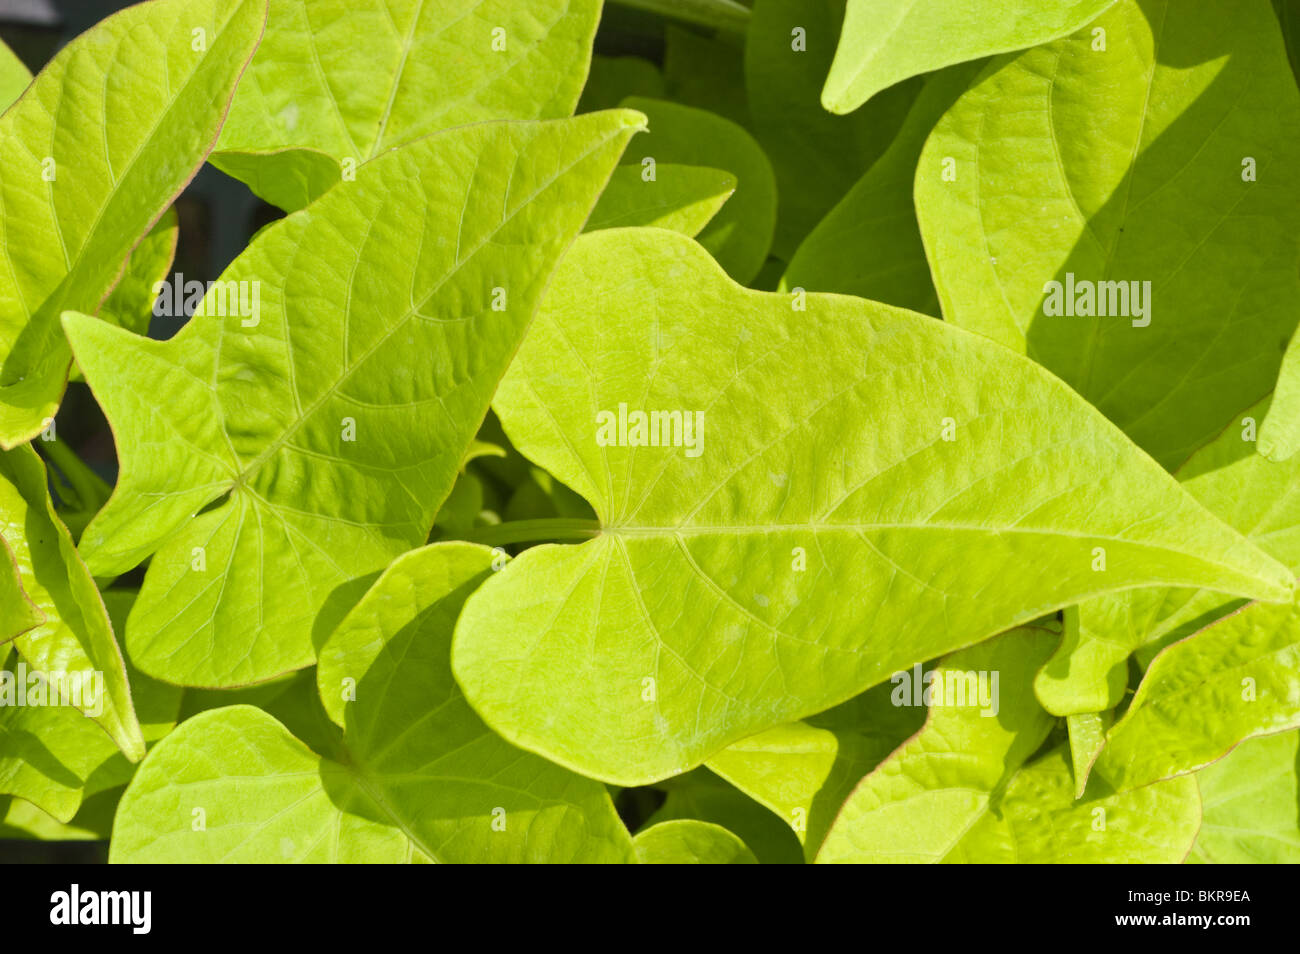 Pale green leaves of sweet potato vine var Margarita, Convolvulaceae, Ipomoea batatas Stock Photo